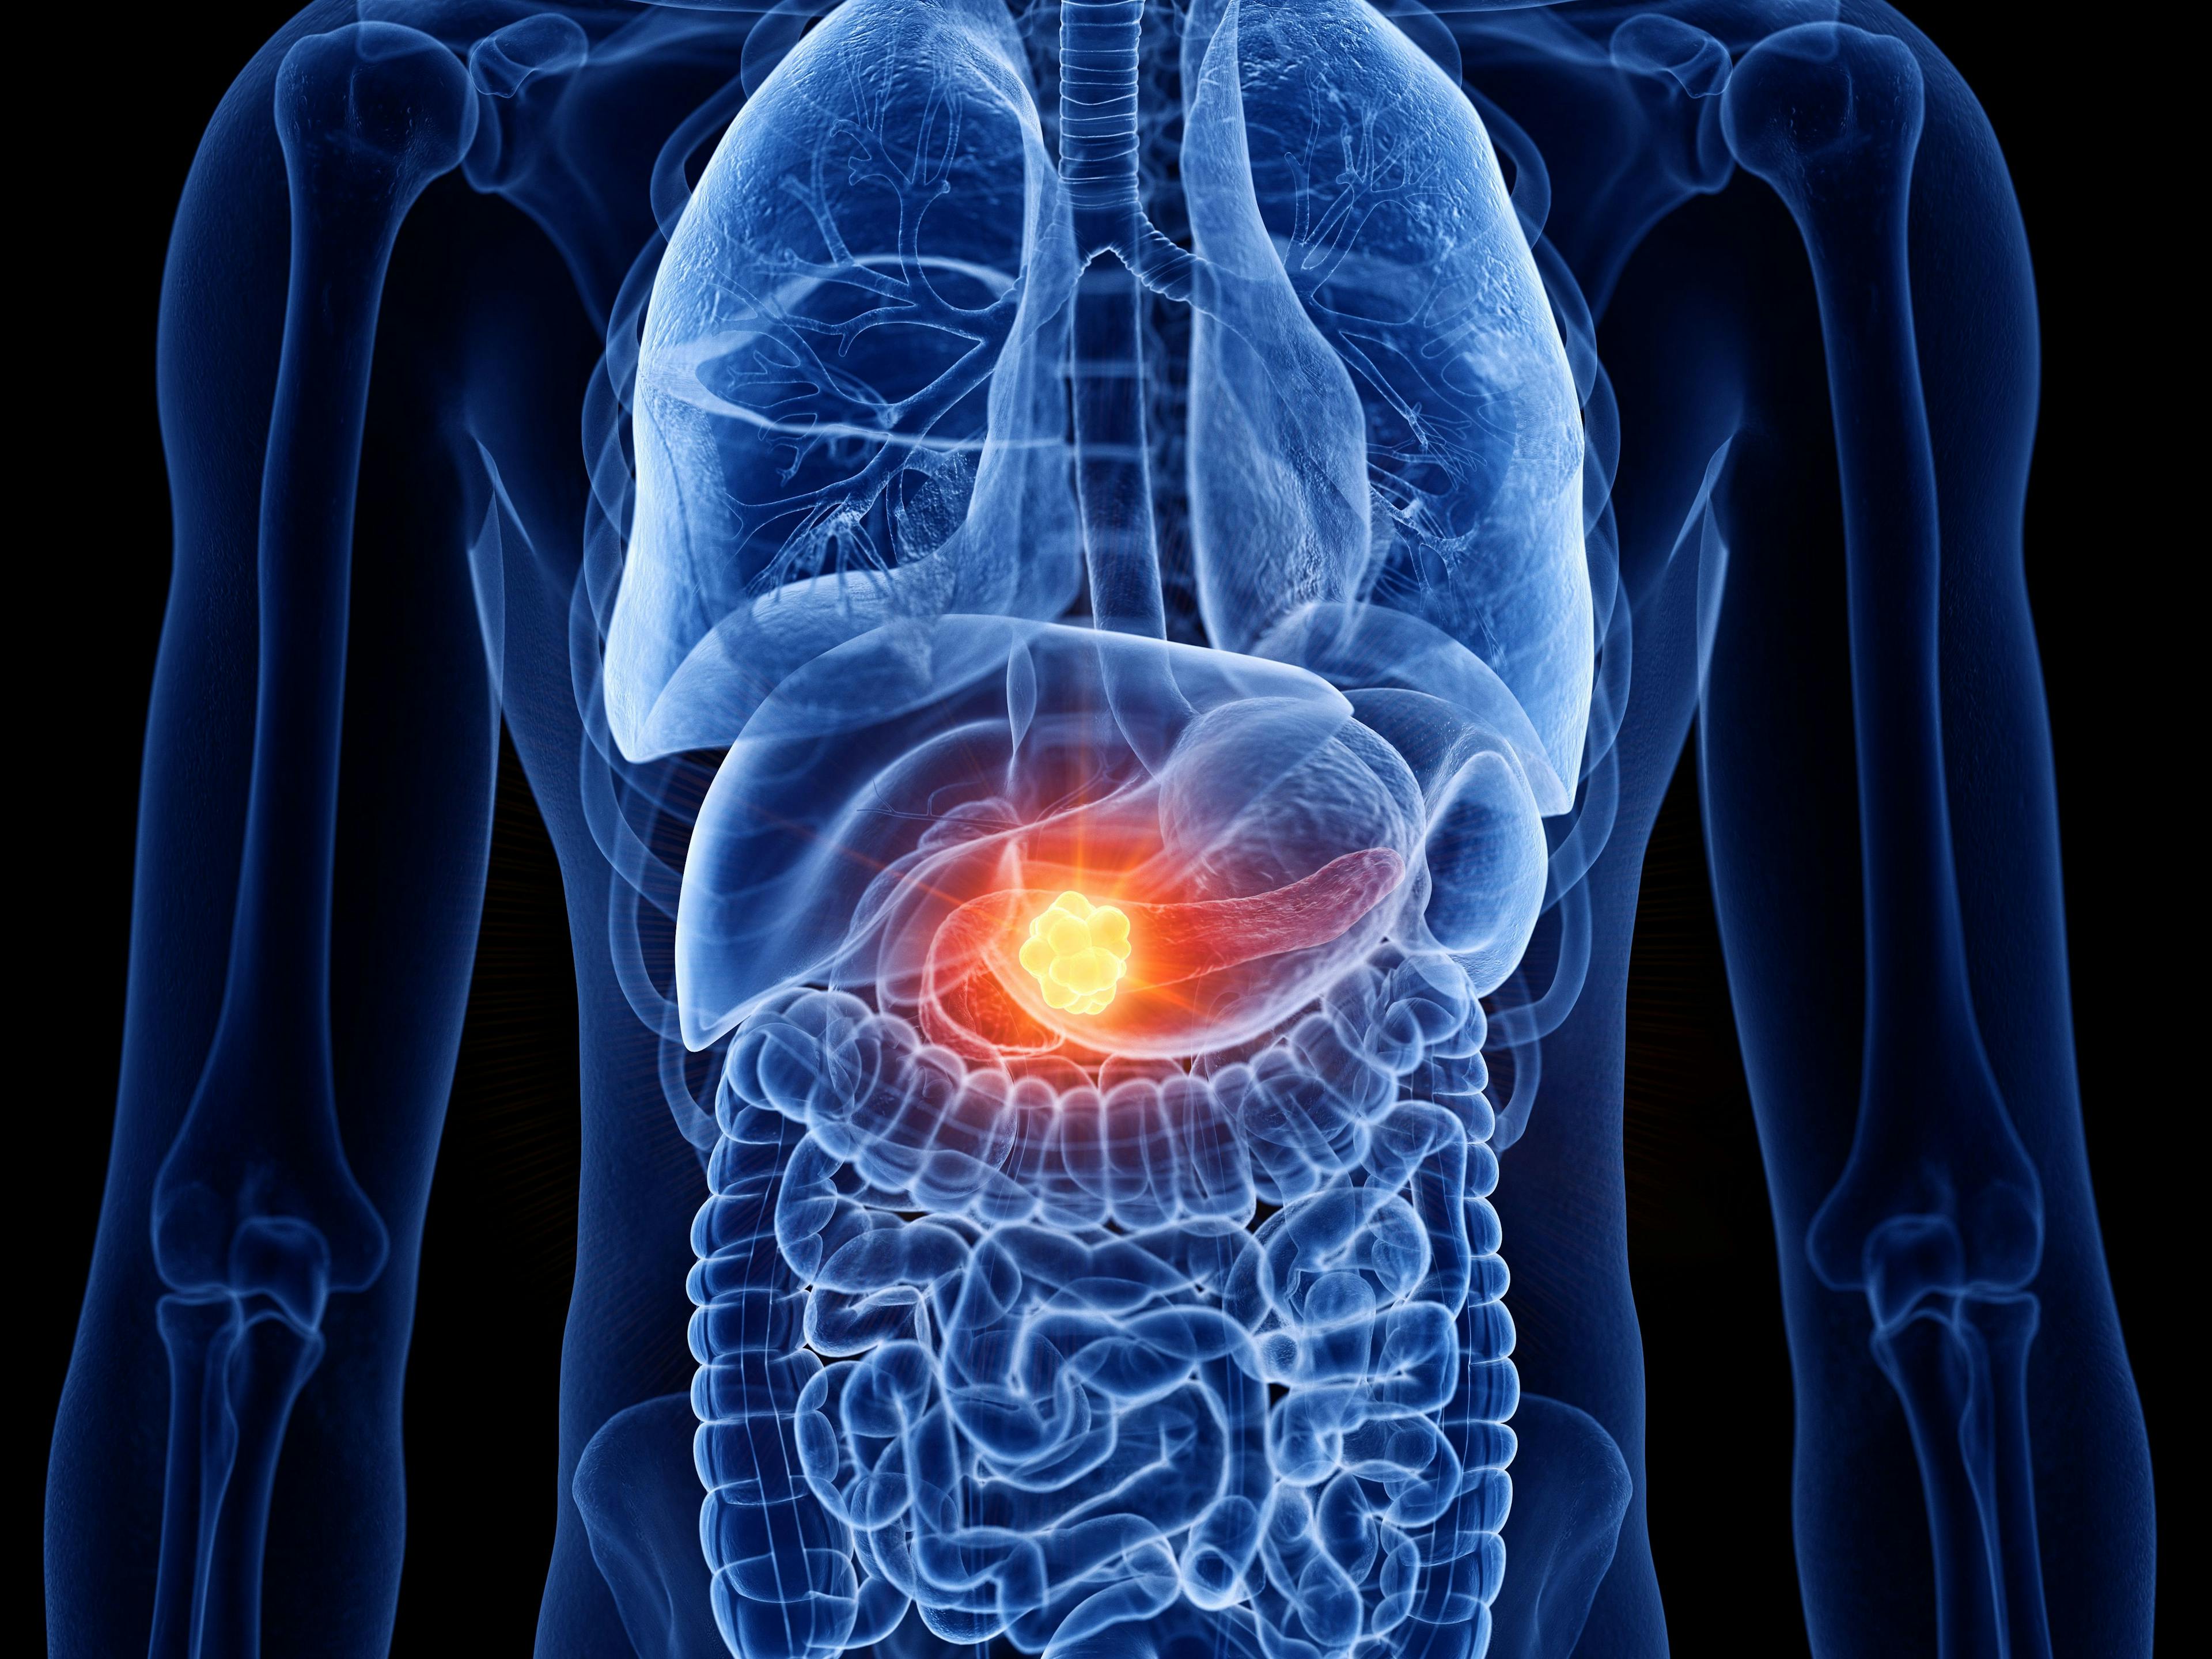 3d rendered medically accurate illustration of pancreas cancer | Image Credit: © Sebastian Kaulitzki - stock.adobe.com